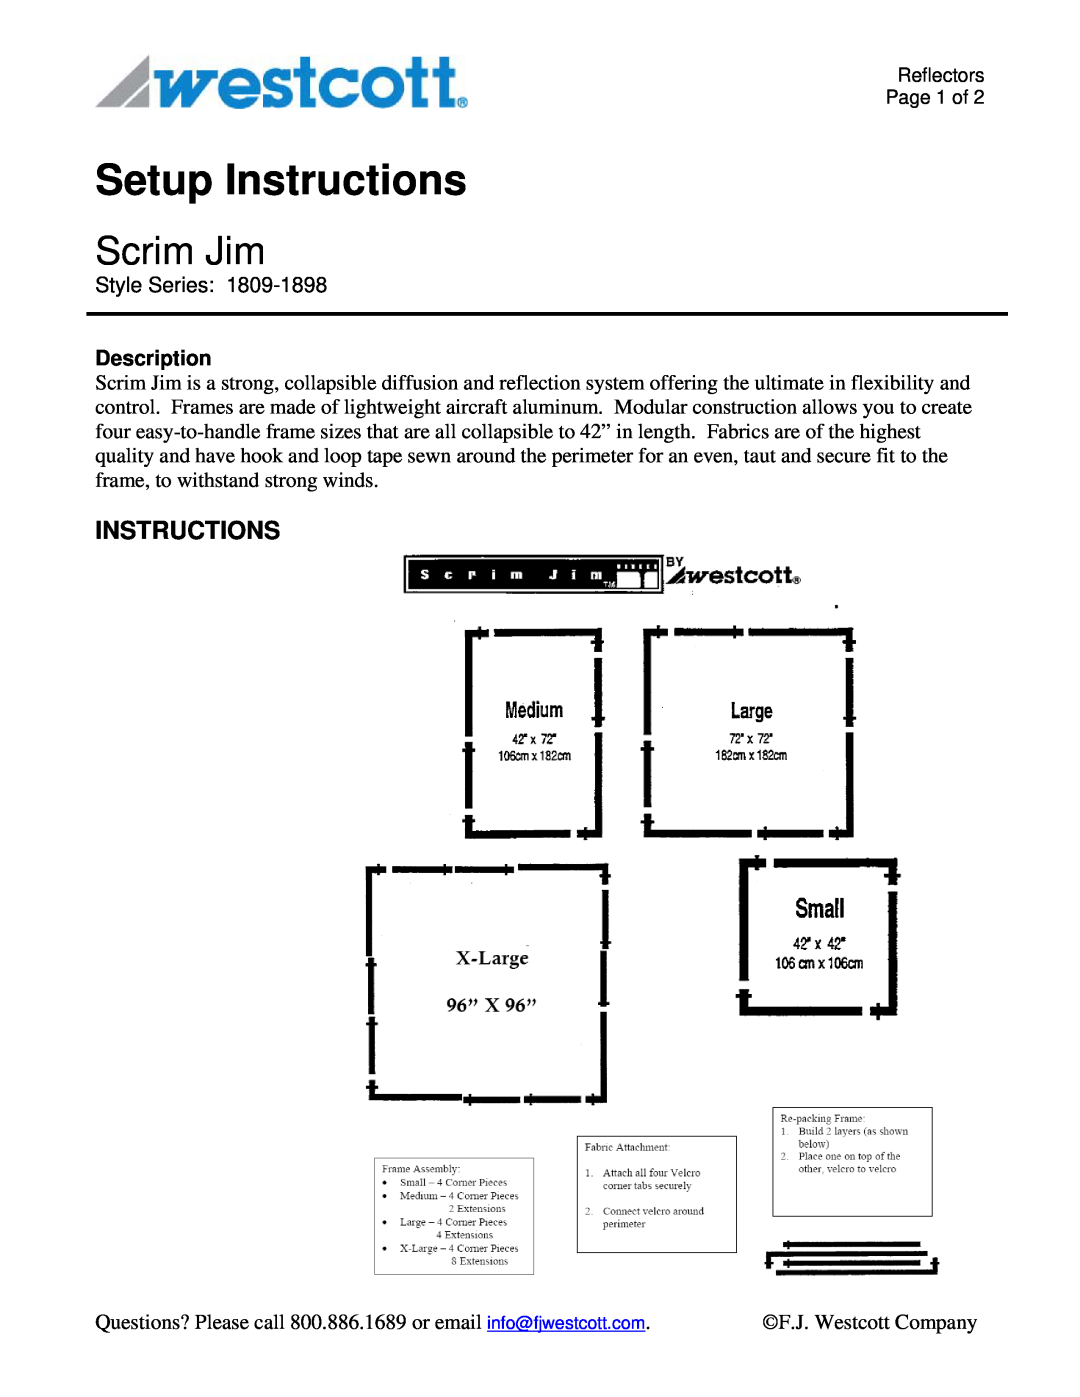 Westcott 1855 manual Setup Instructions, Scrim Jim, Description 